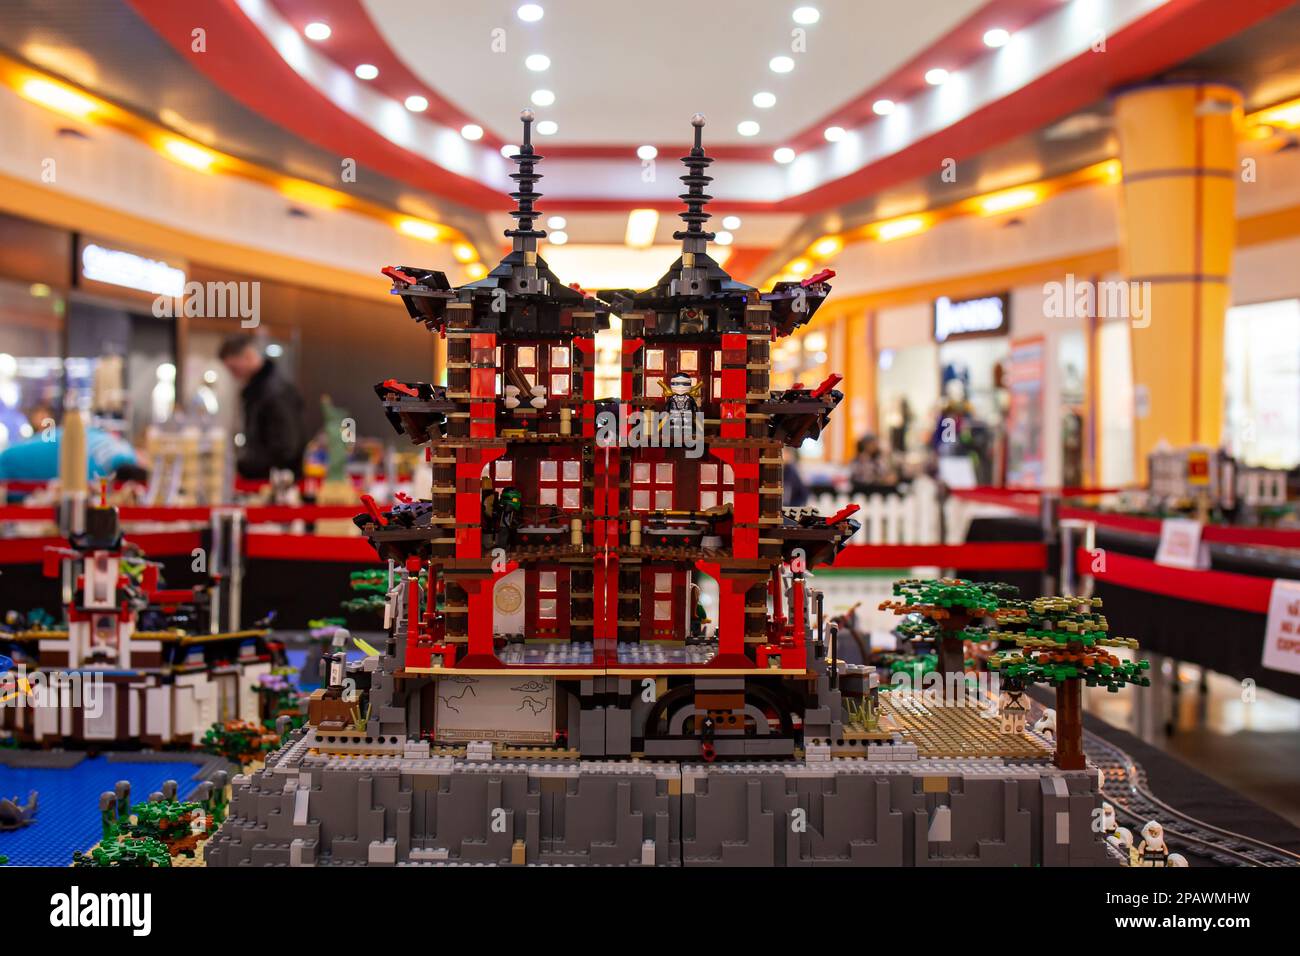 Lego ninjago world hi-res stock photography and images - Alamy